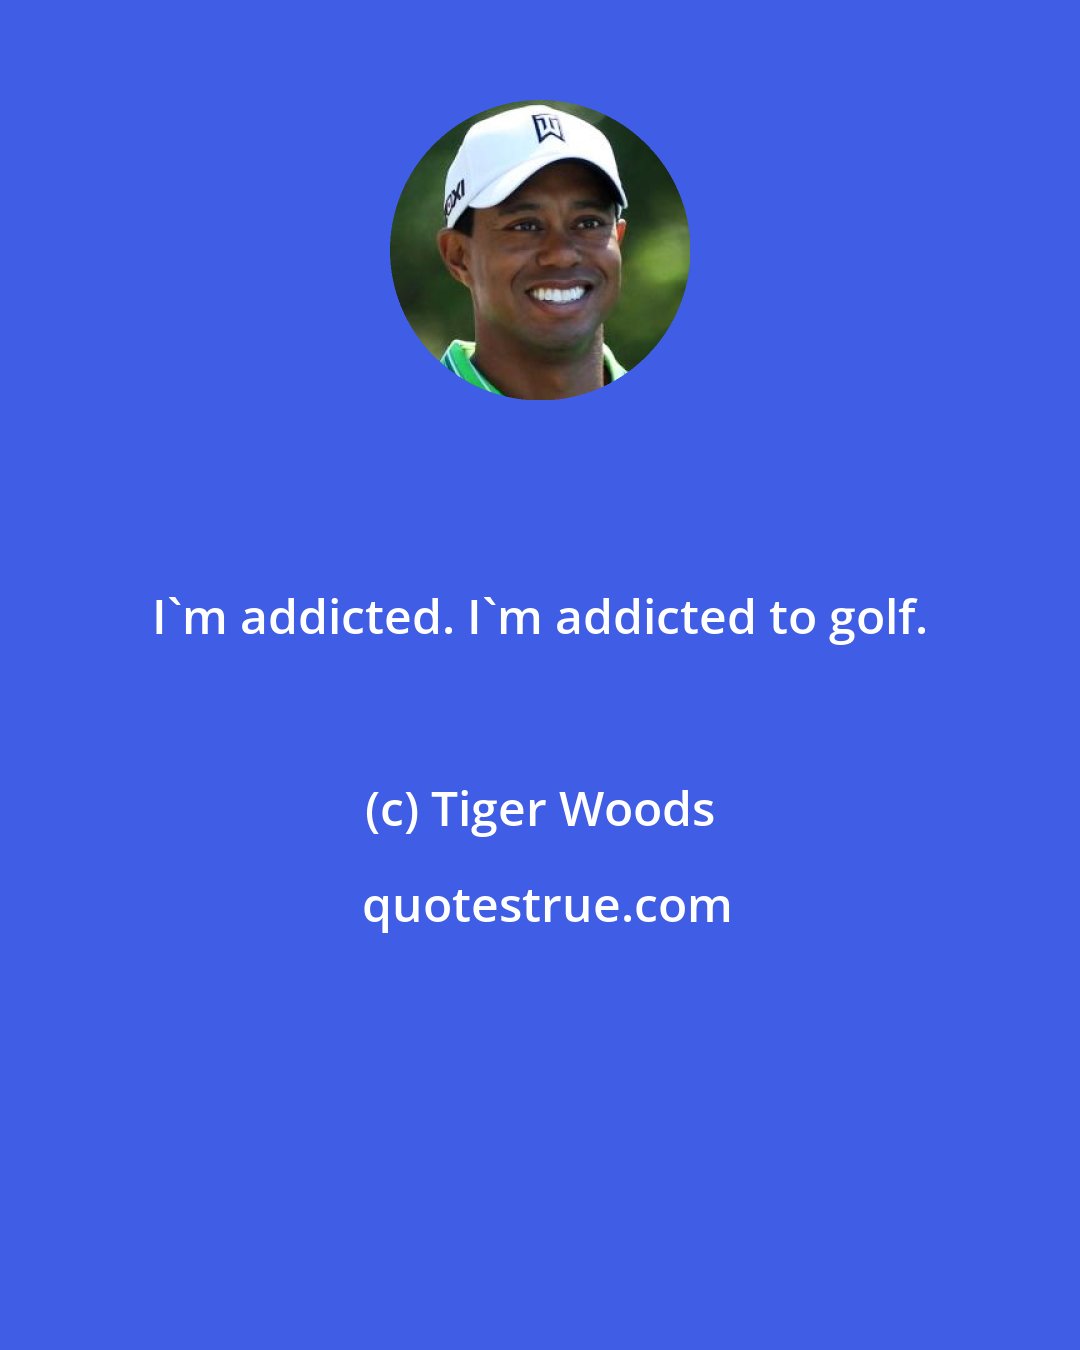 Tiger Woods: I'm addicted. I'm addicted to golf.